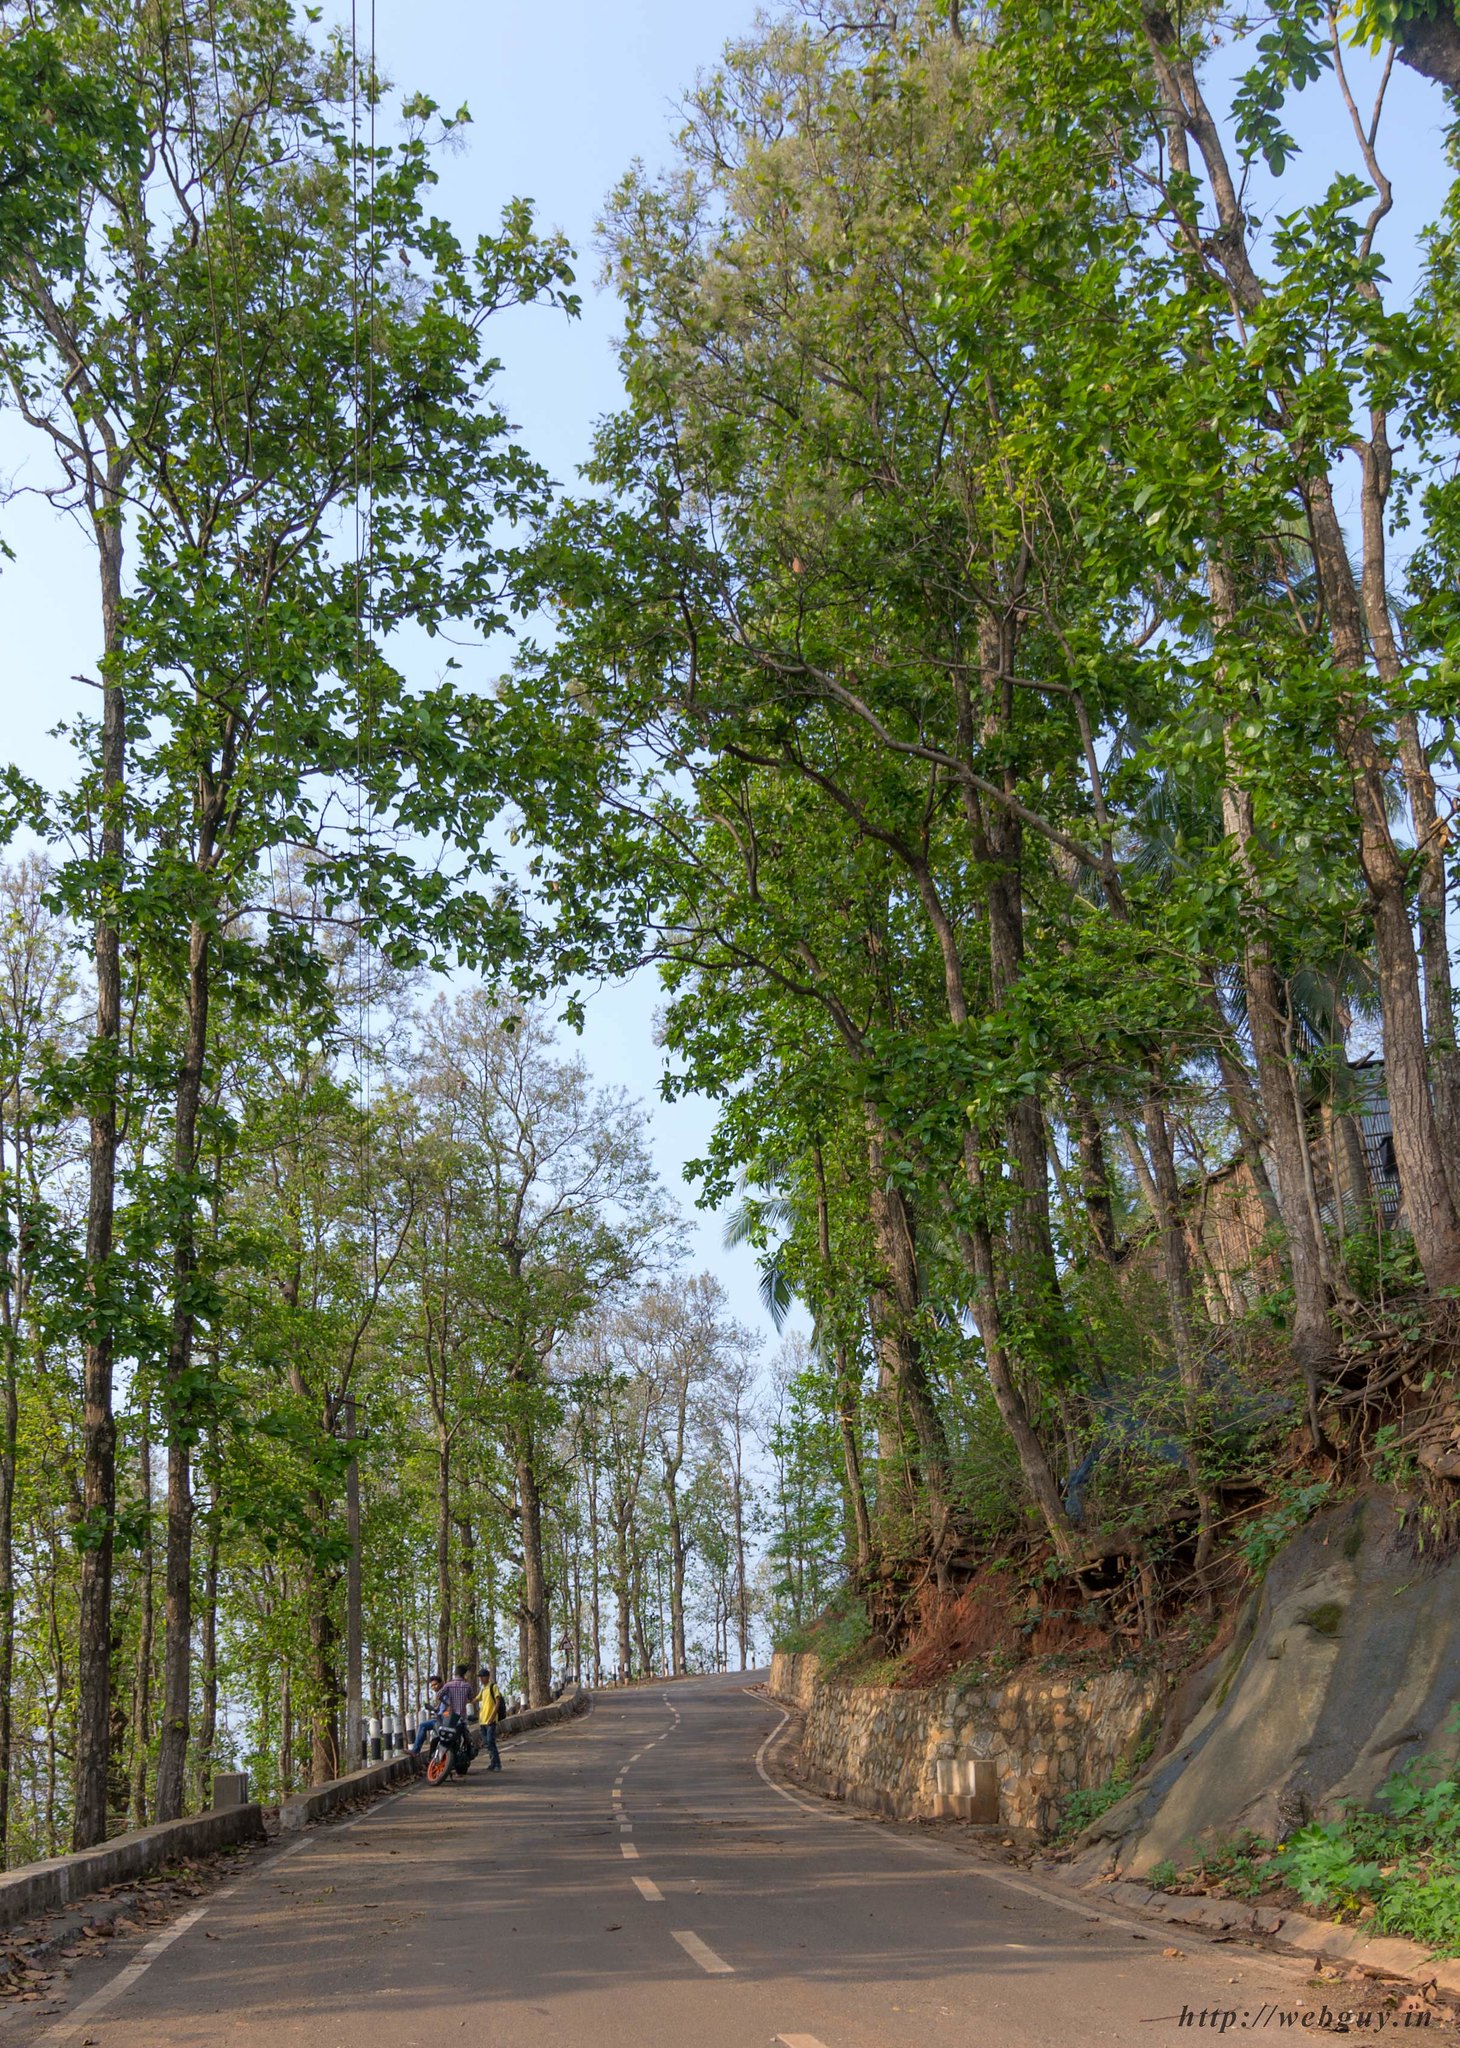 The canopied roads of Garurachal Hill photo, Hajo